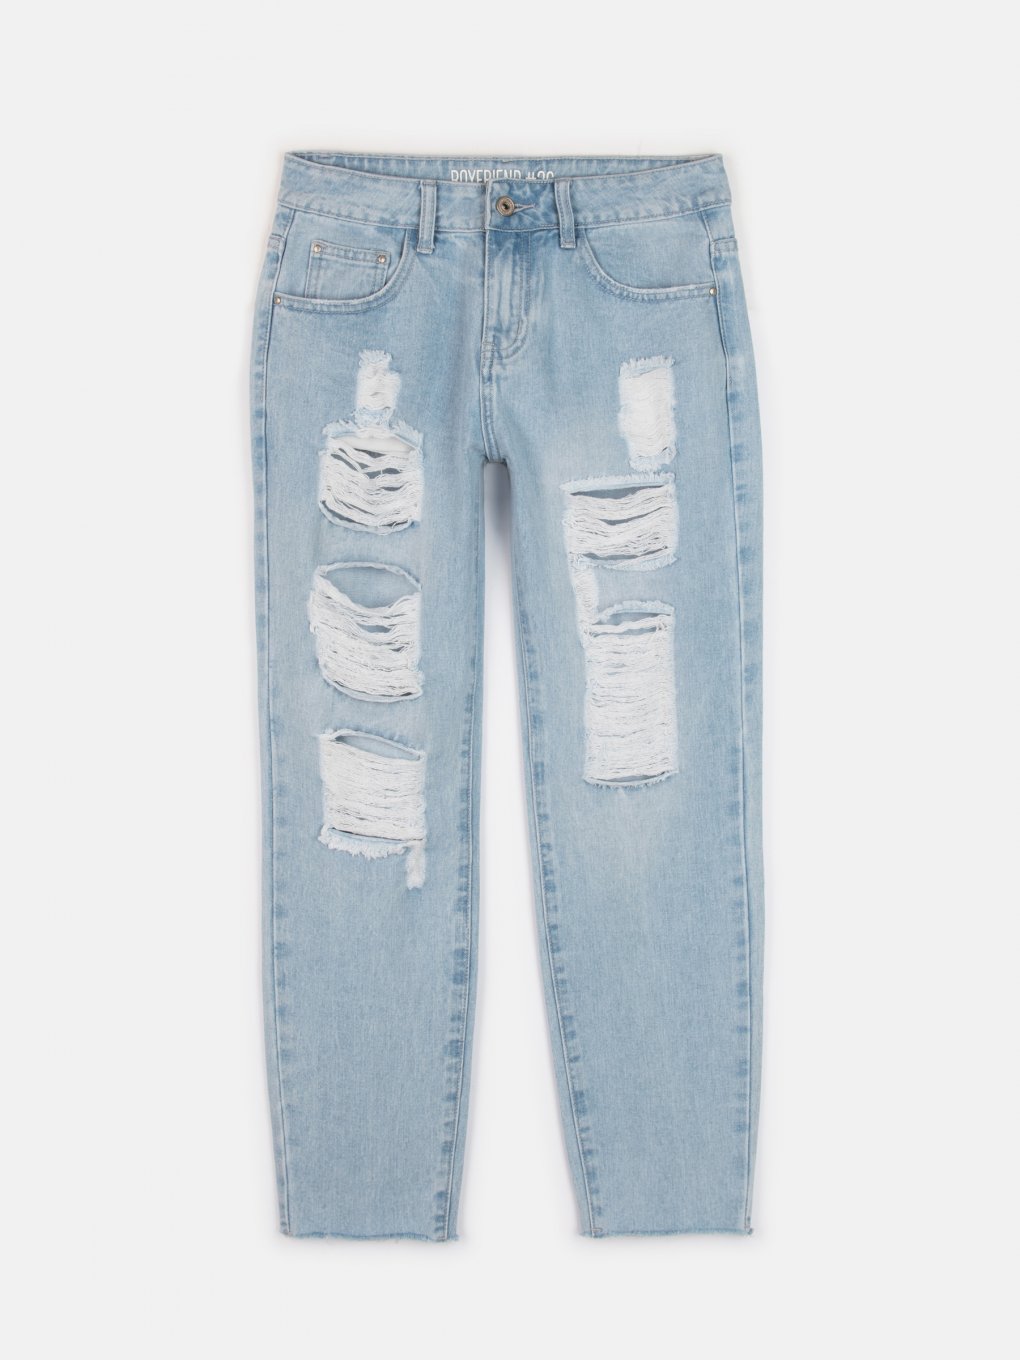 Distressed boyfriend jeans